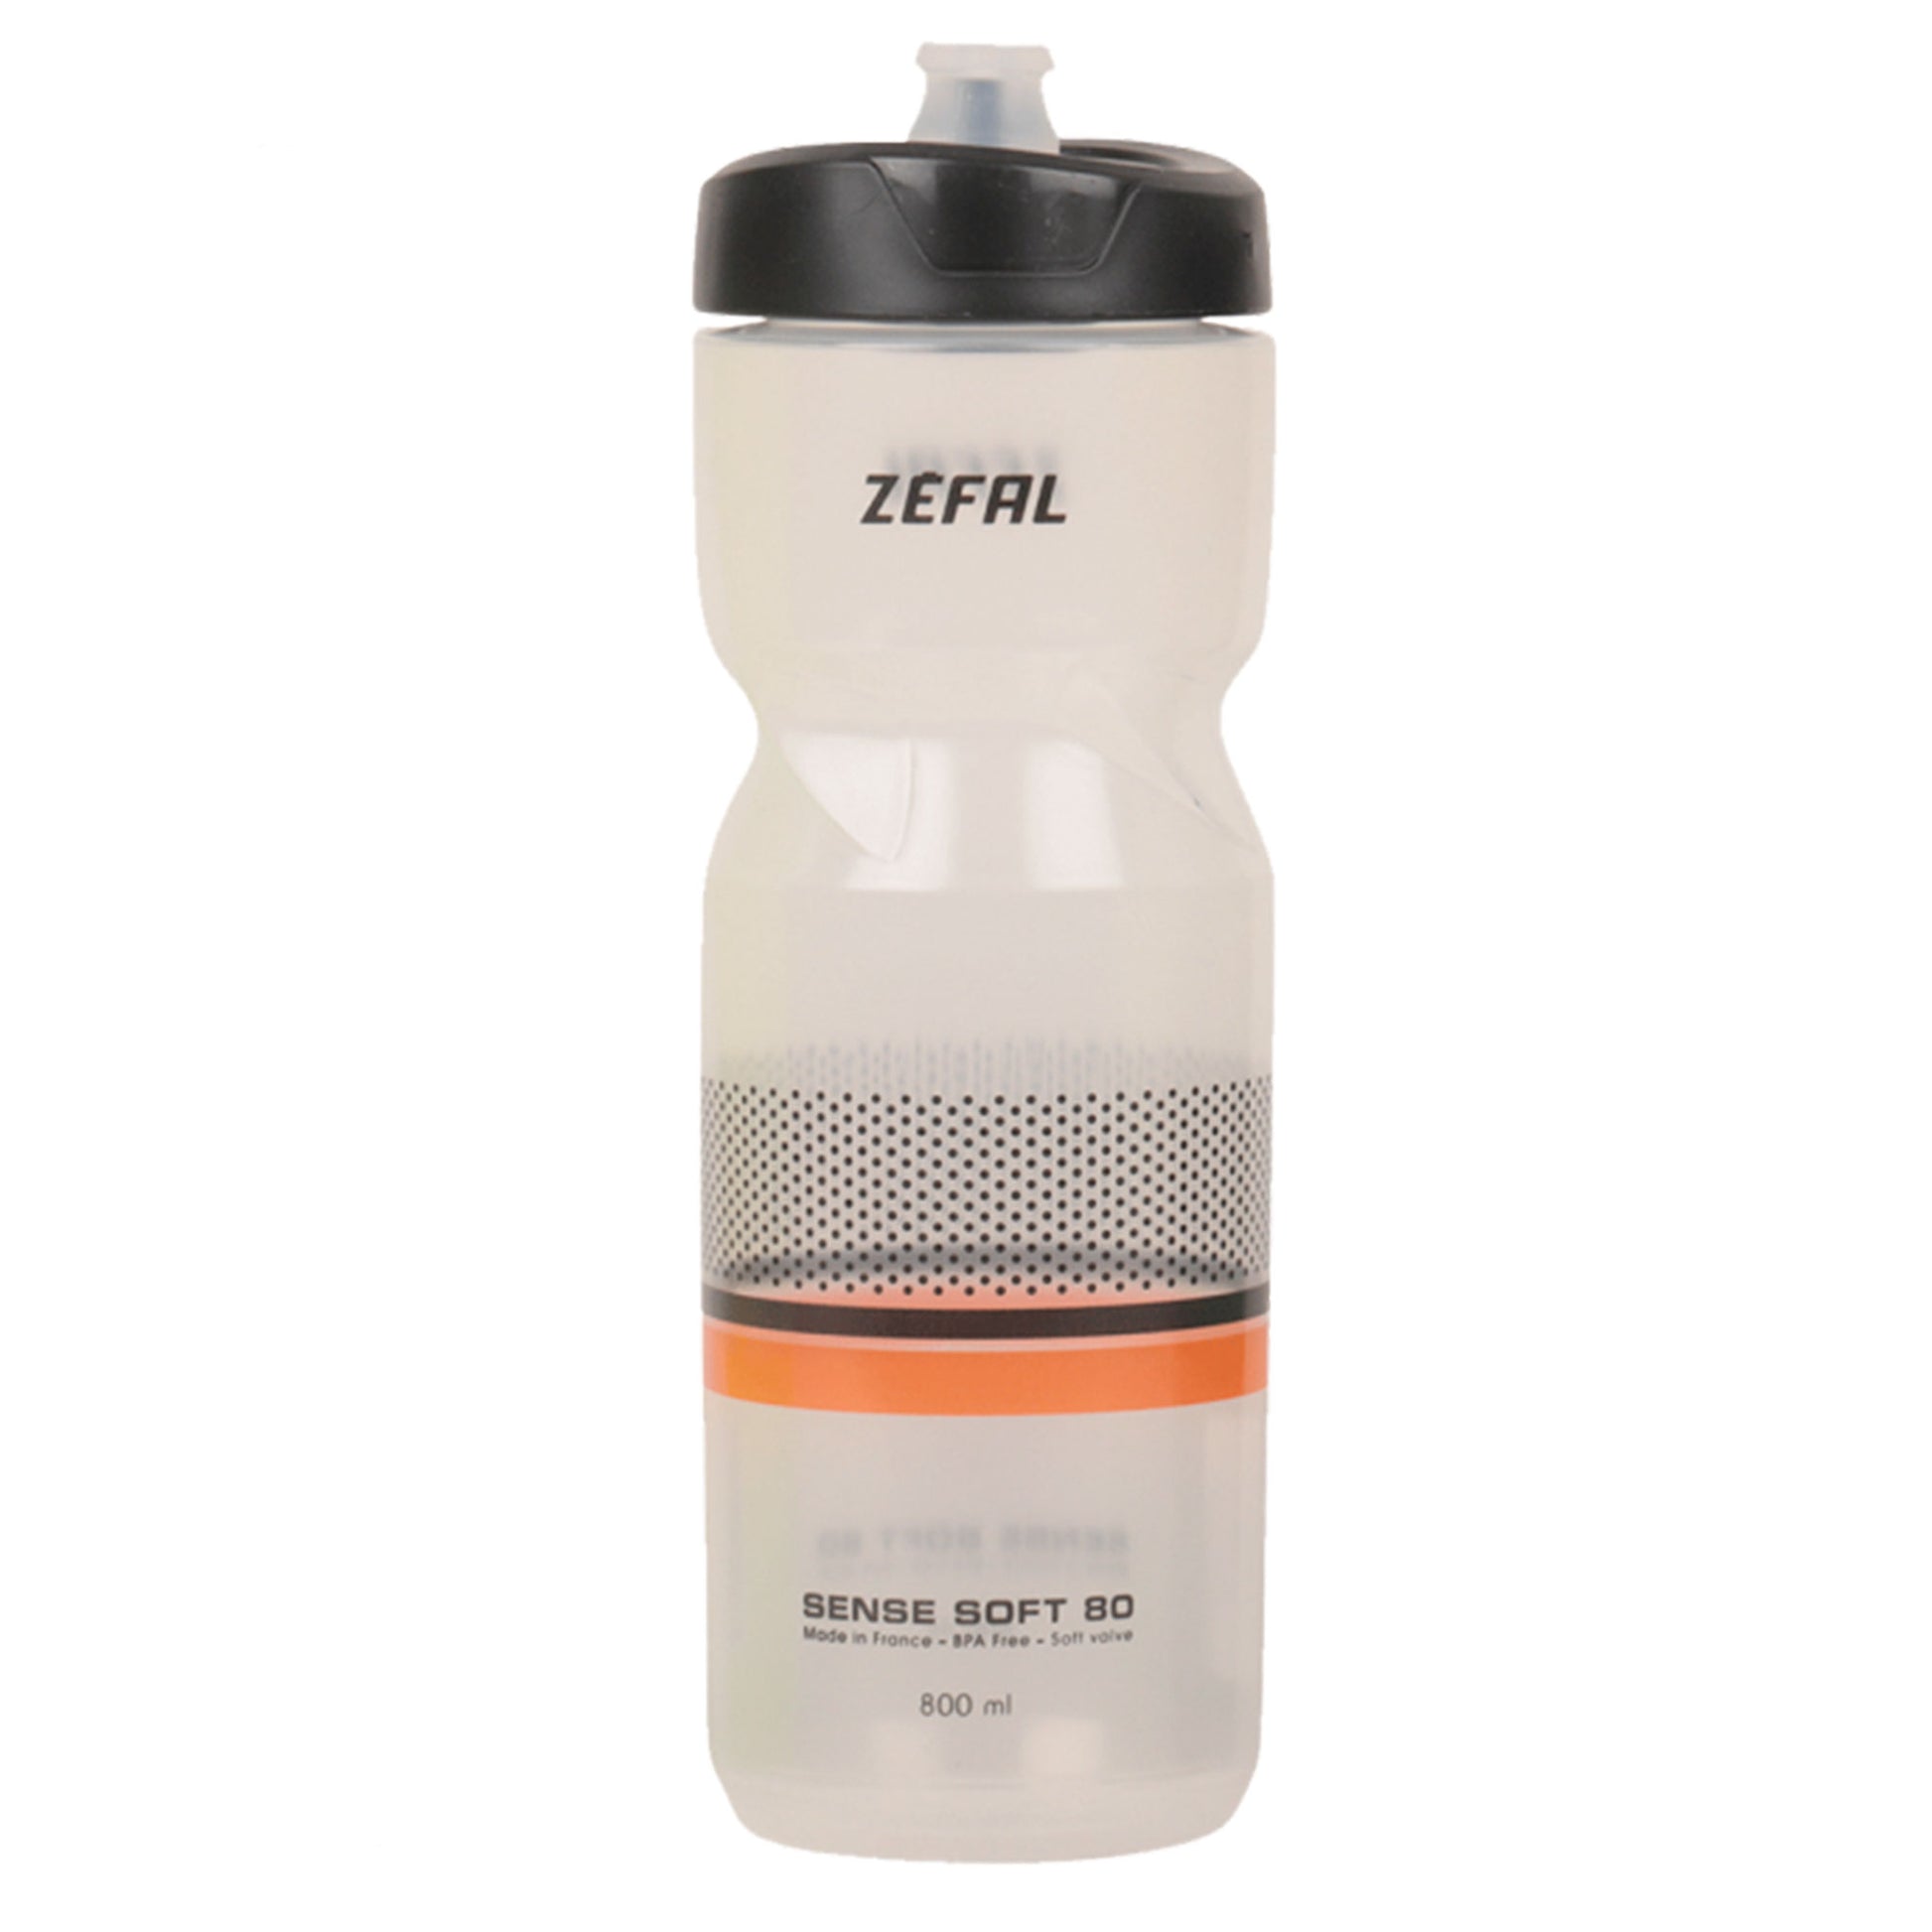 Zefal Sense Soft 80 Water Bottle 800ml, Translucent